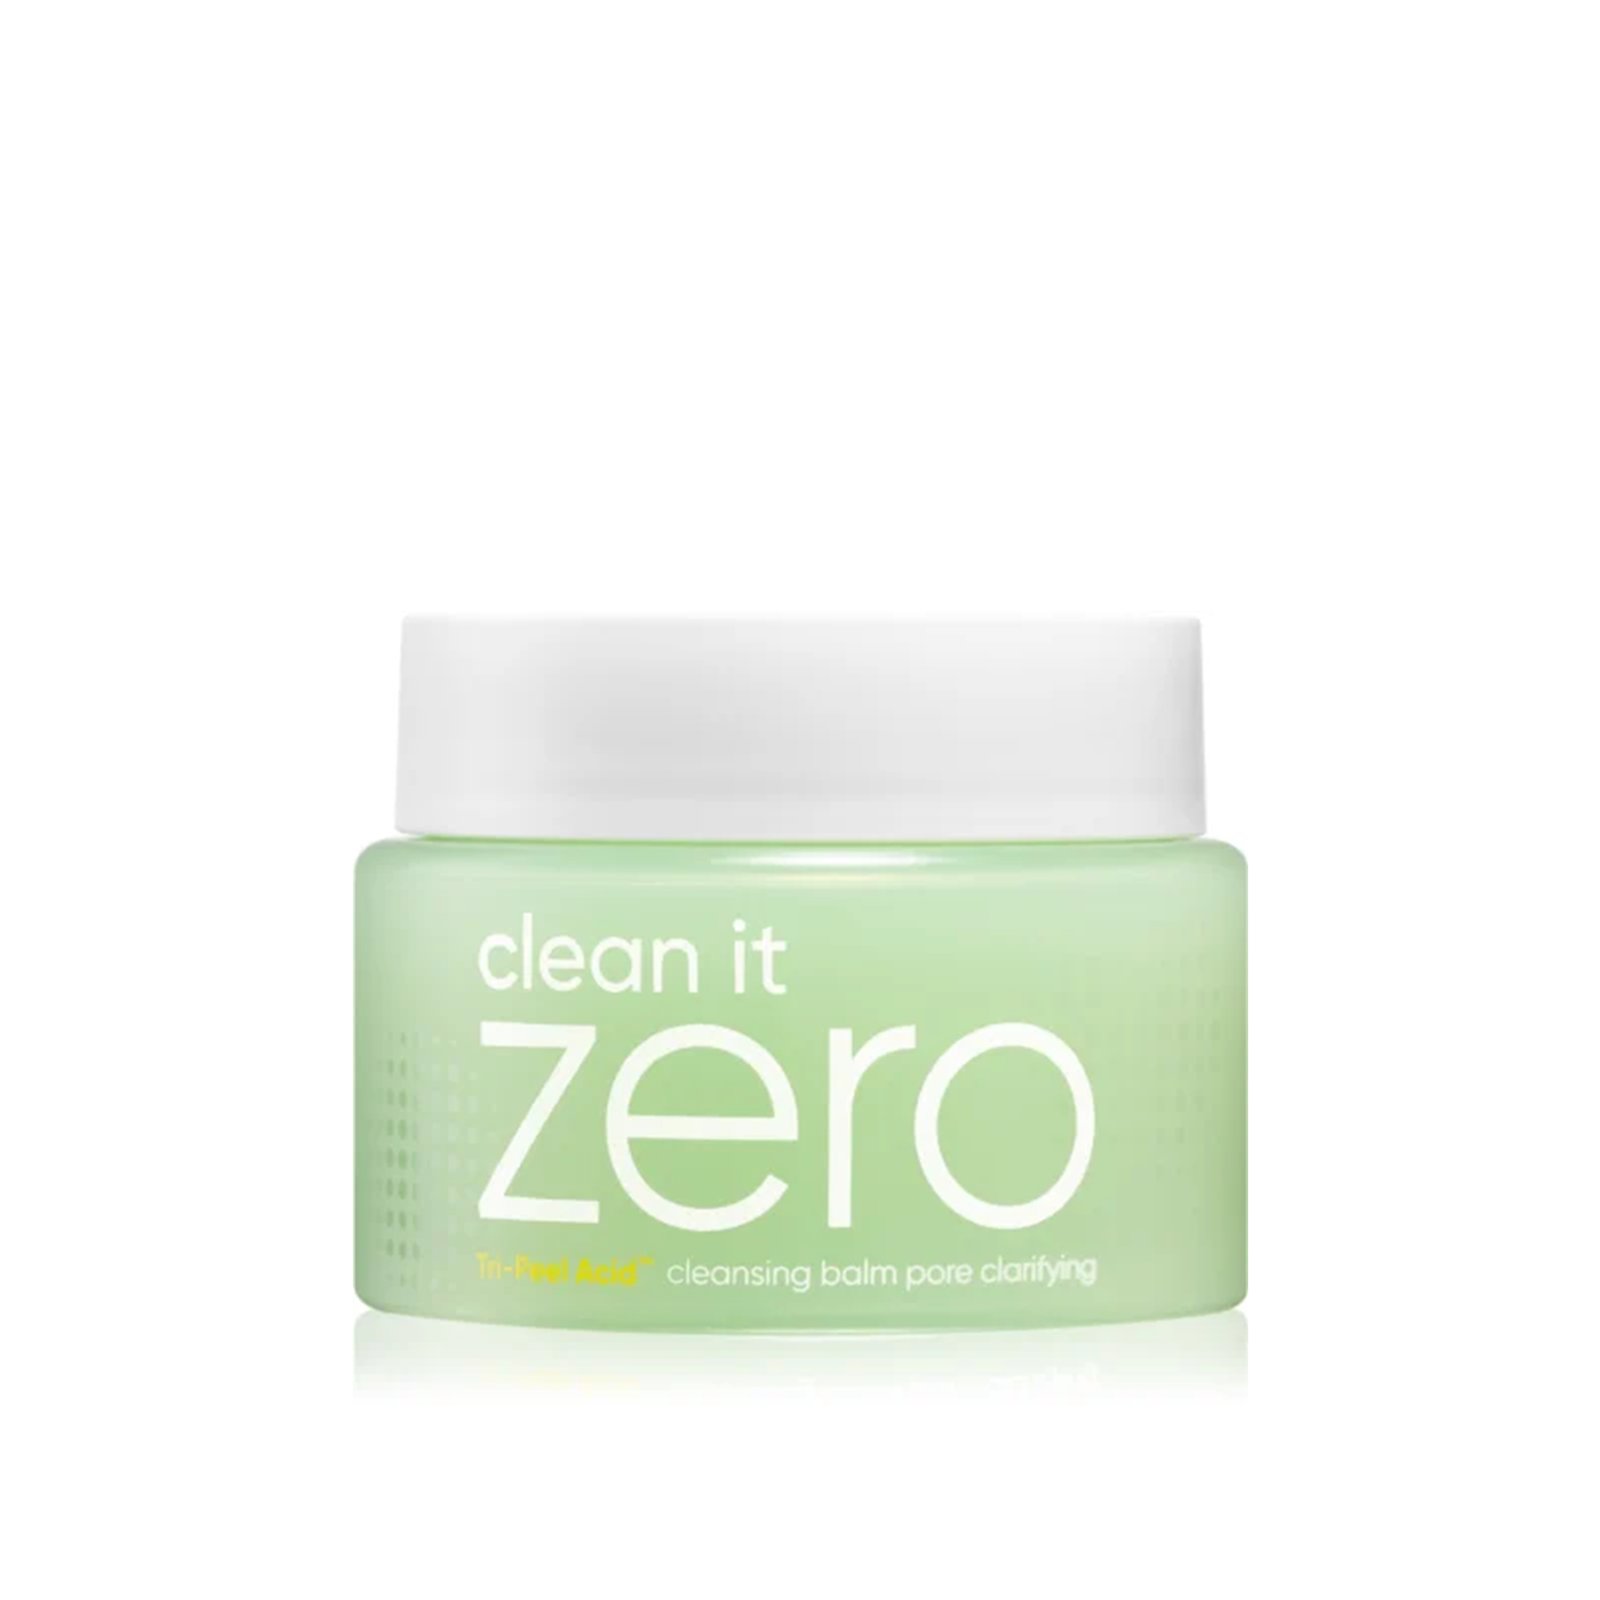 Banila Co Clean It Zero Cleansing Balm Pore Clarifying 100ml (3.38 fl oz)